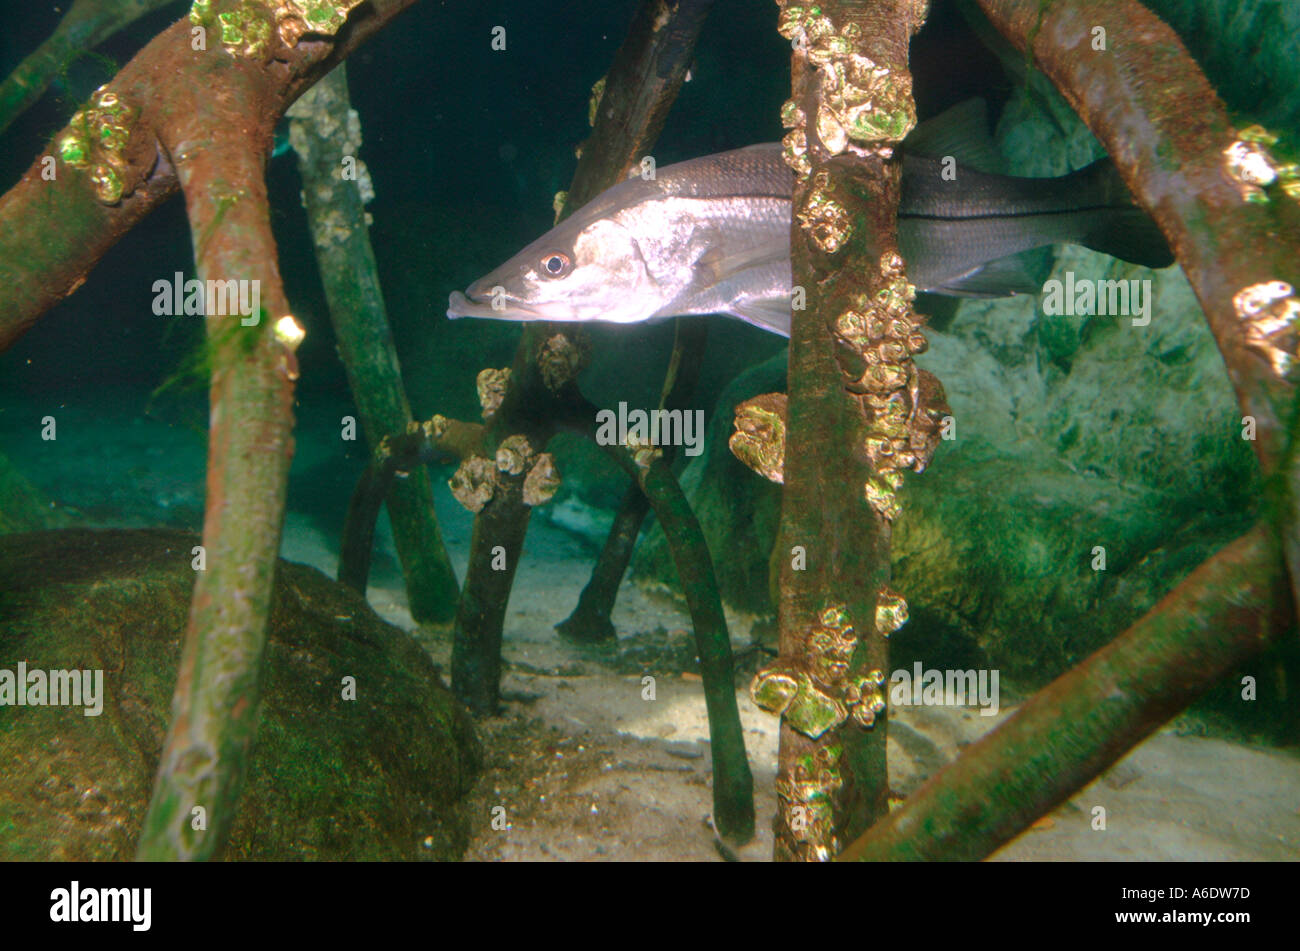 snook Centropomus undecimalis among red mangrove Rhizophora mangle roots Stock Photo